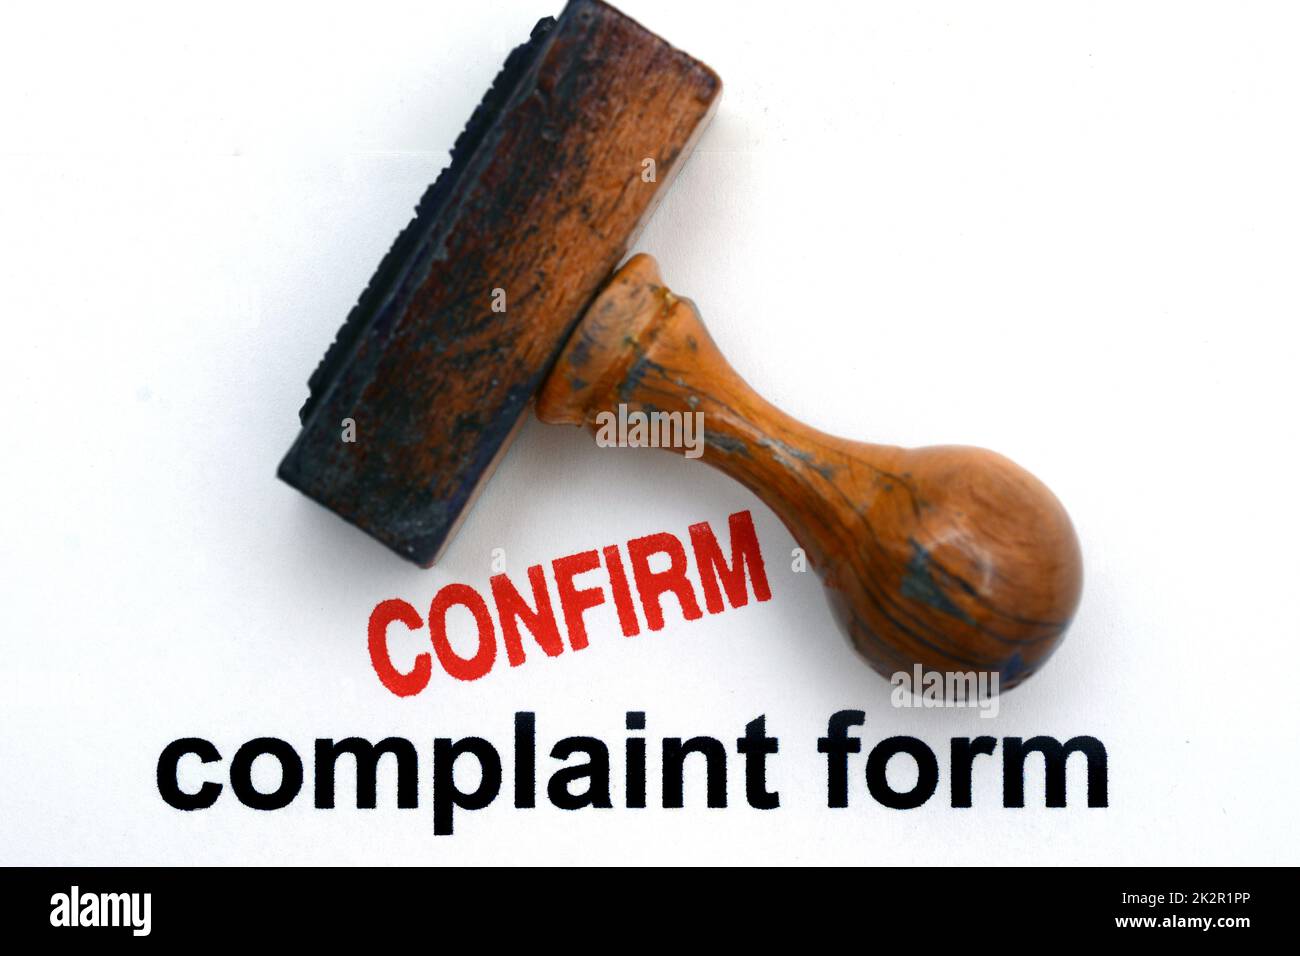 Complain form confirm Stock Photo